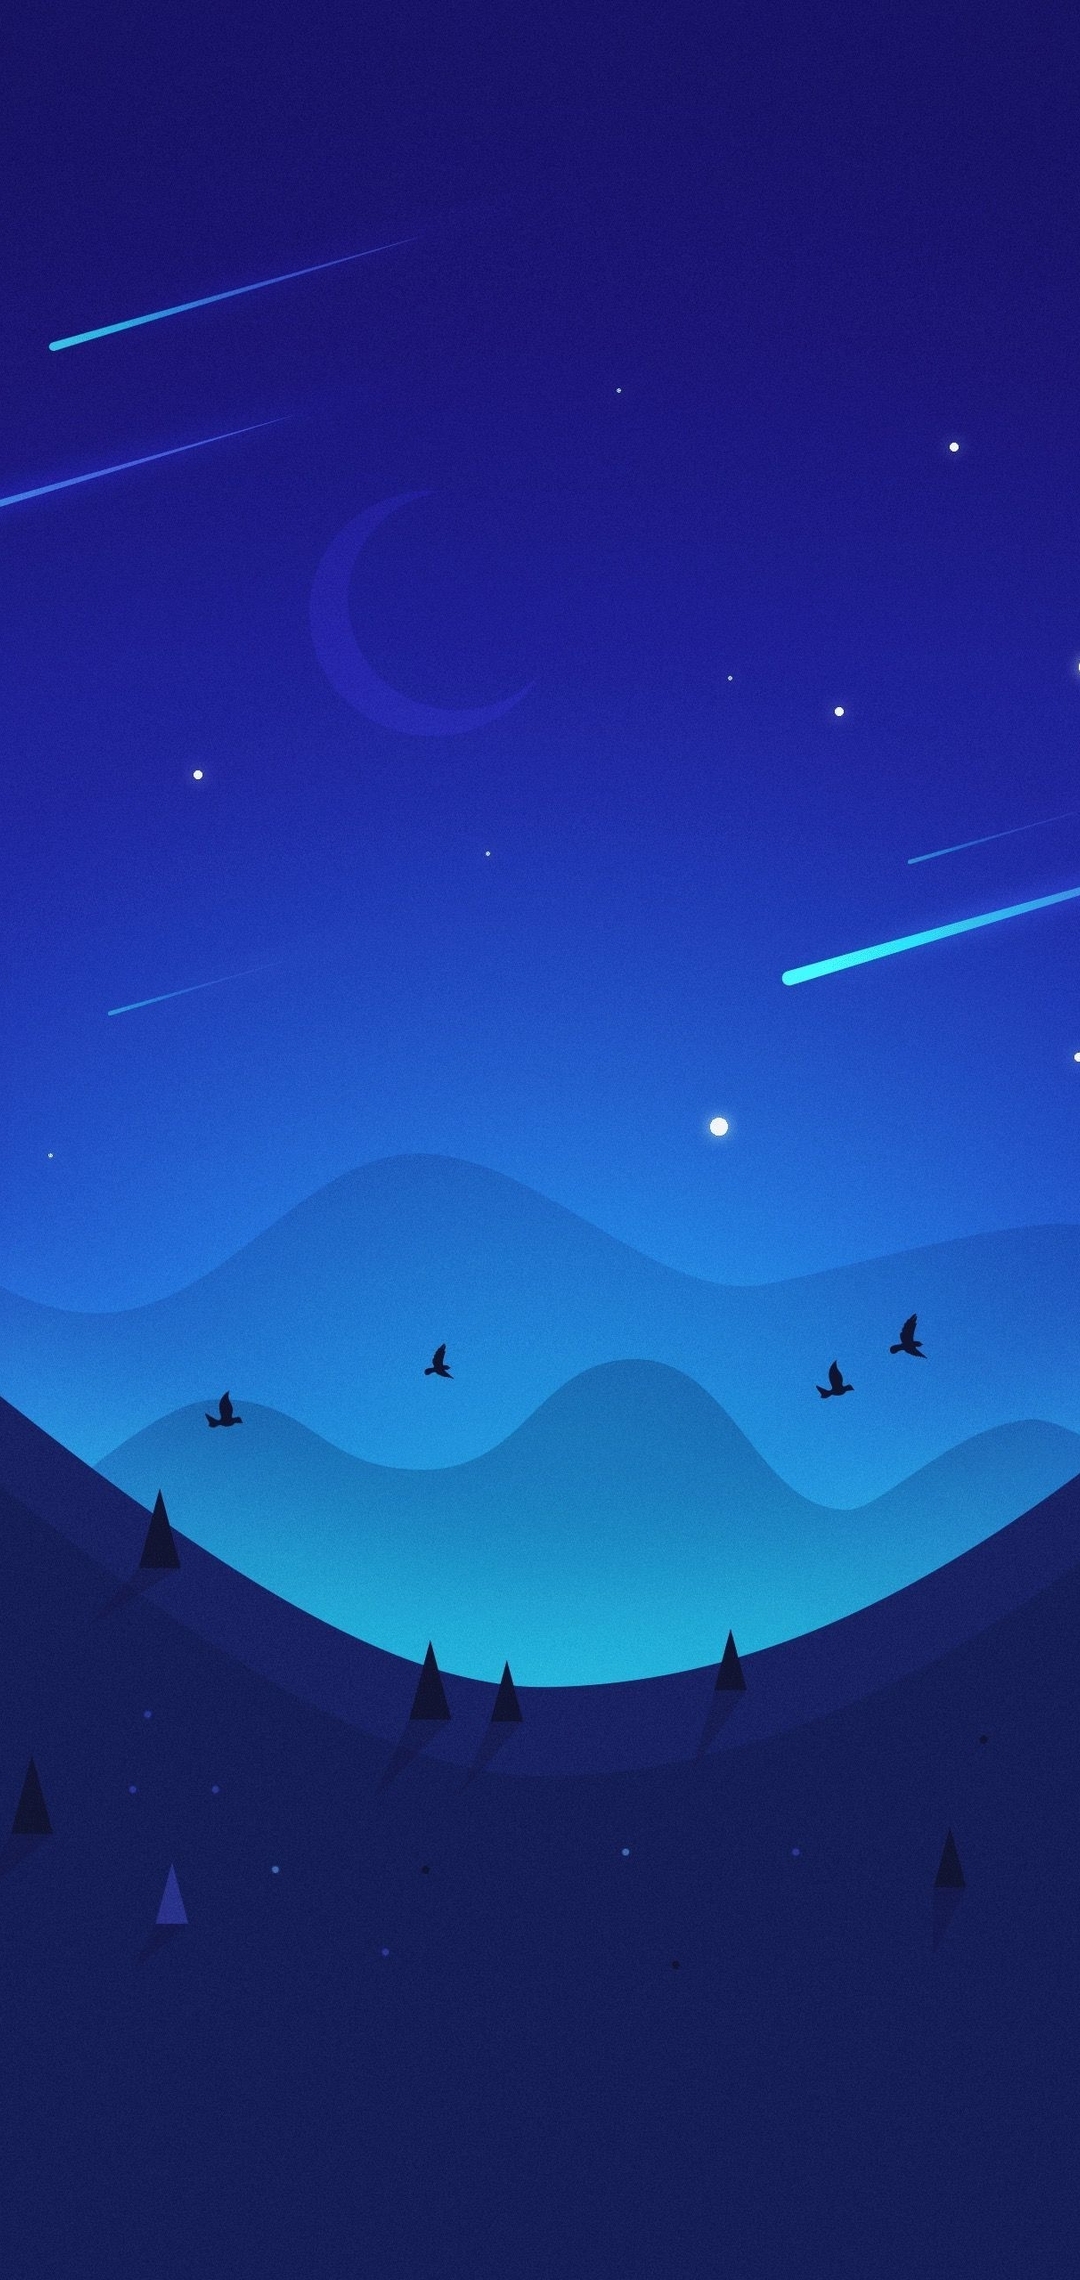 Image: Night, sky, stars, month, mountains, birds